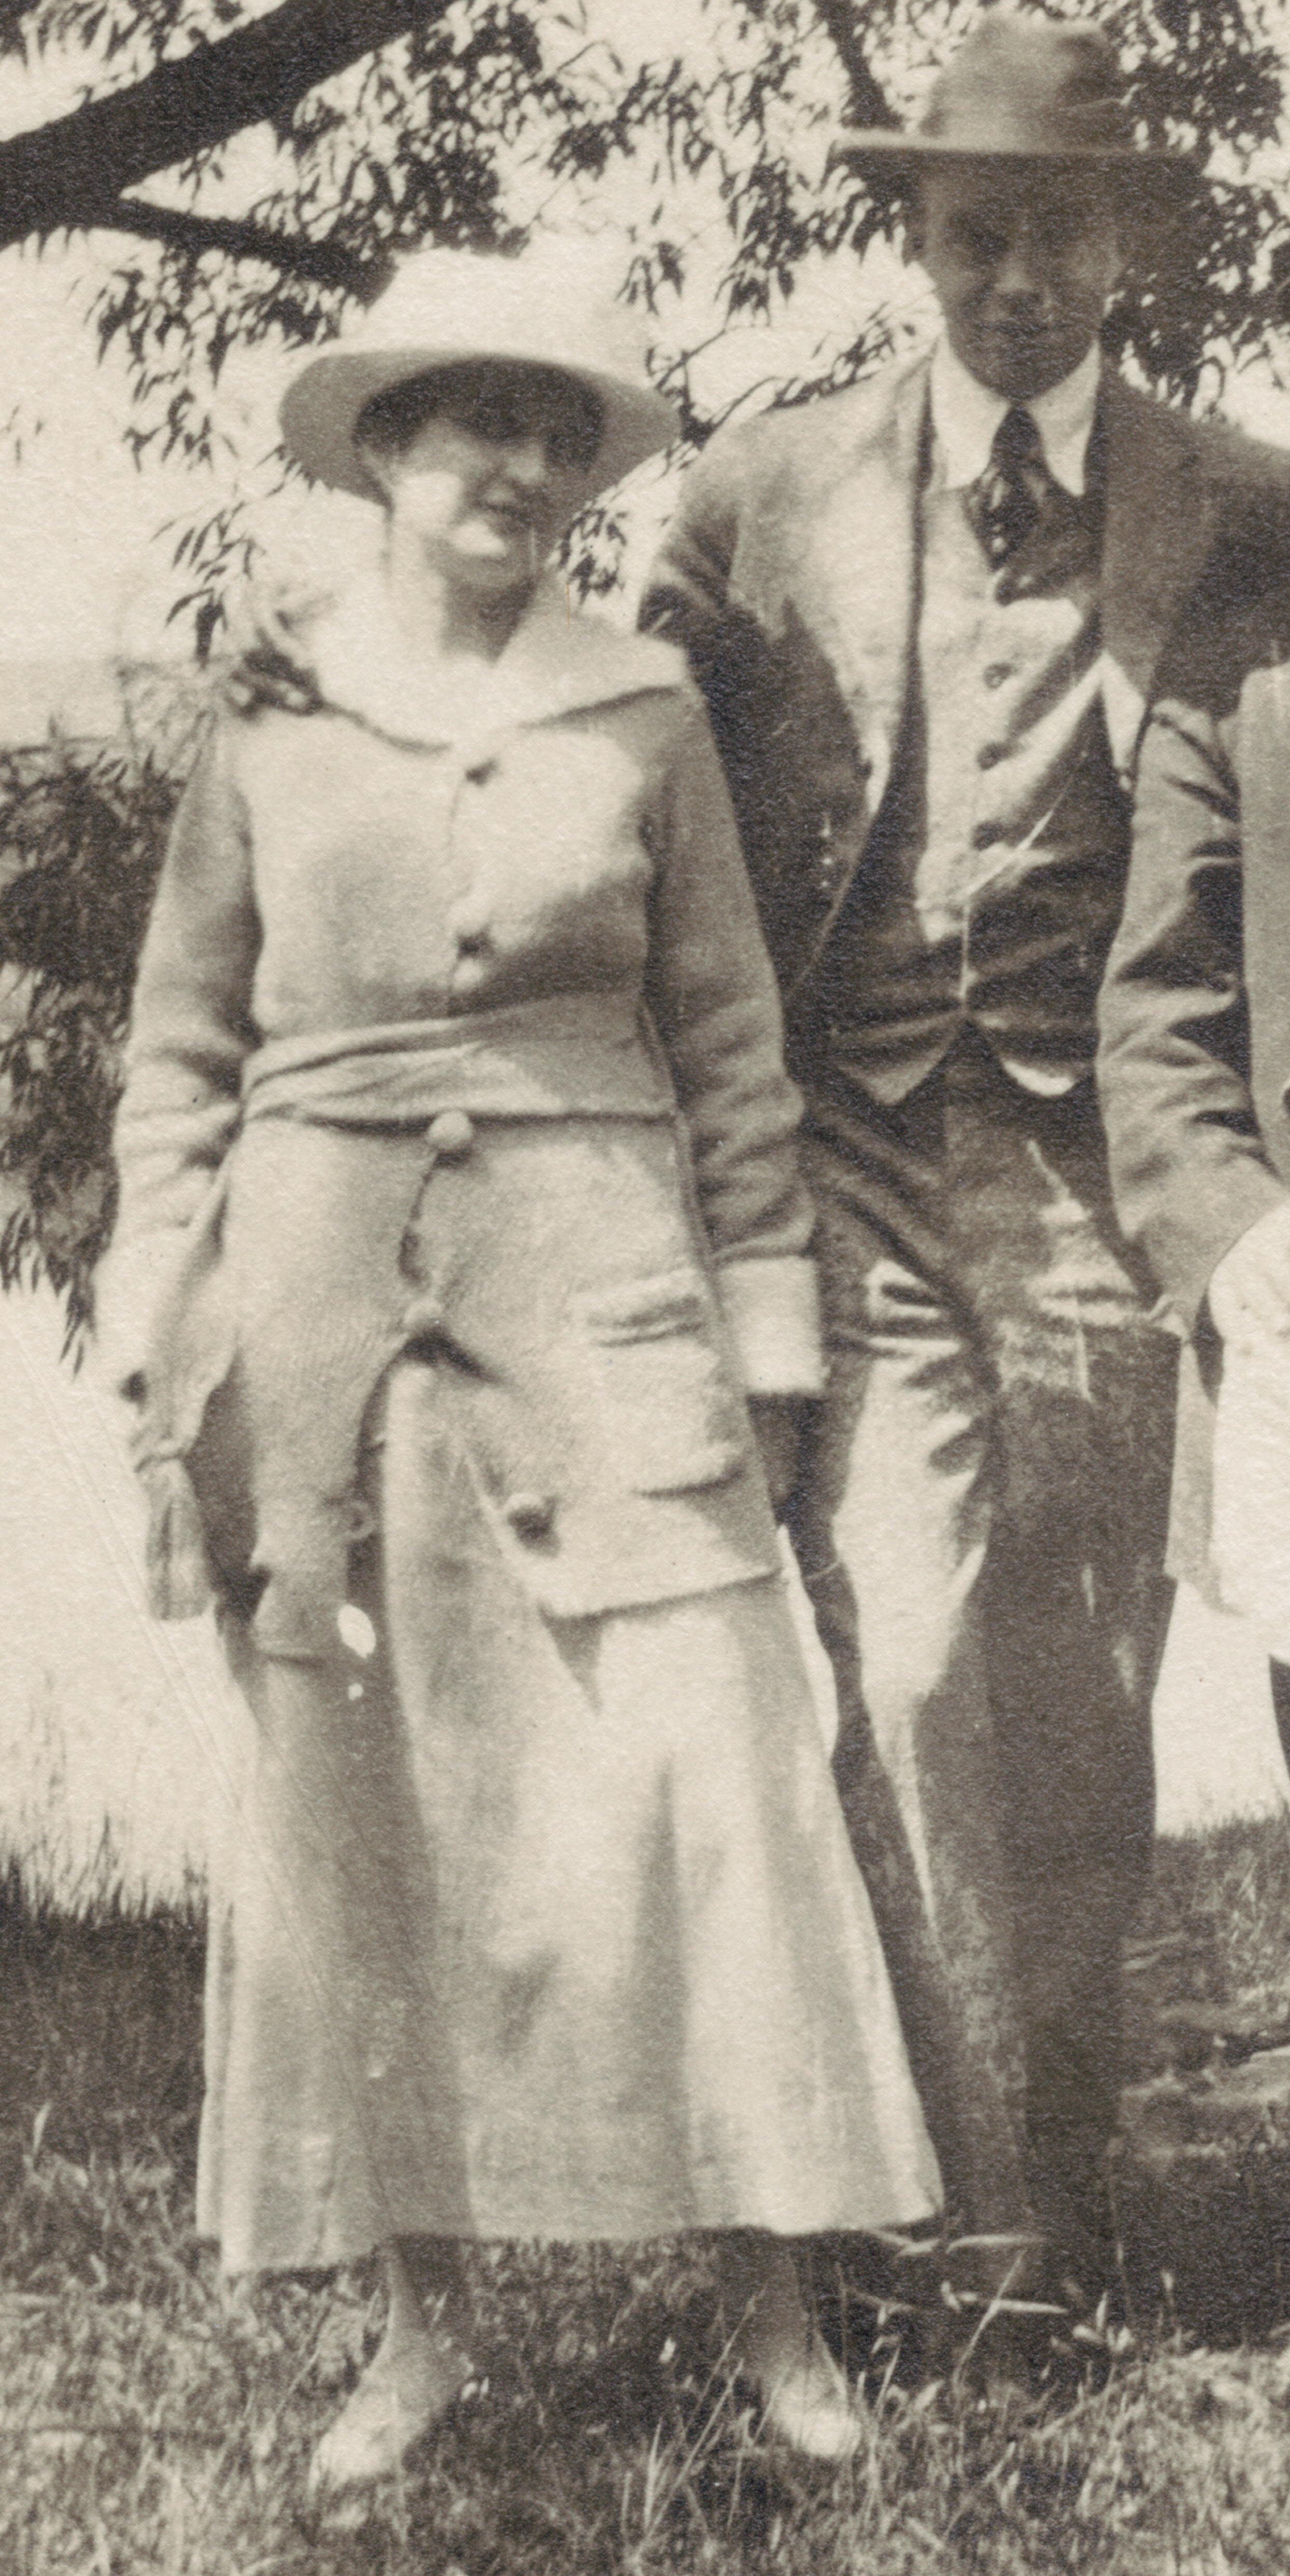 John H. and Helen Poehlman, circa 1916